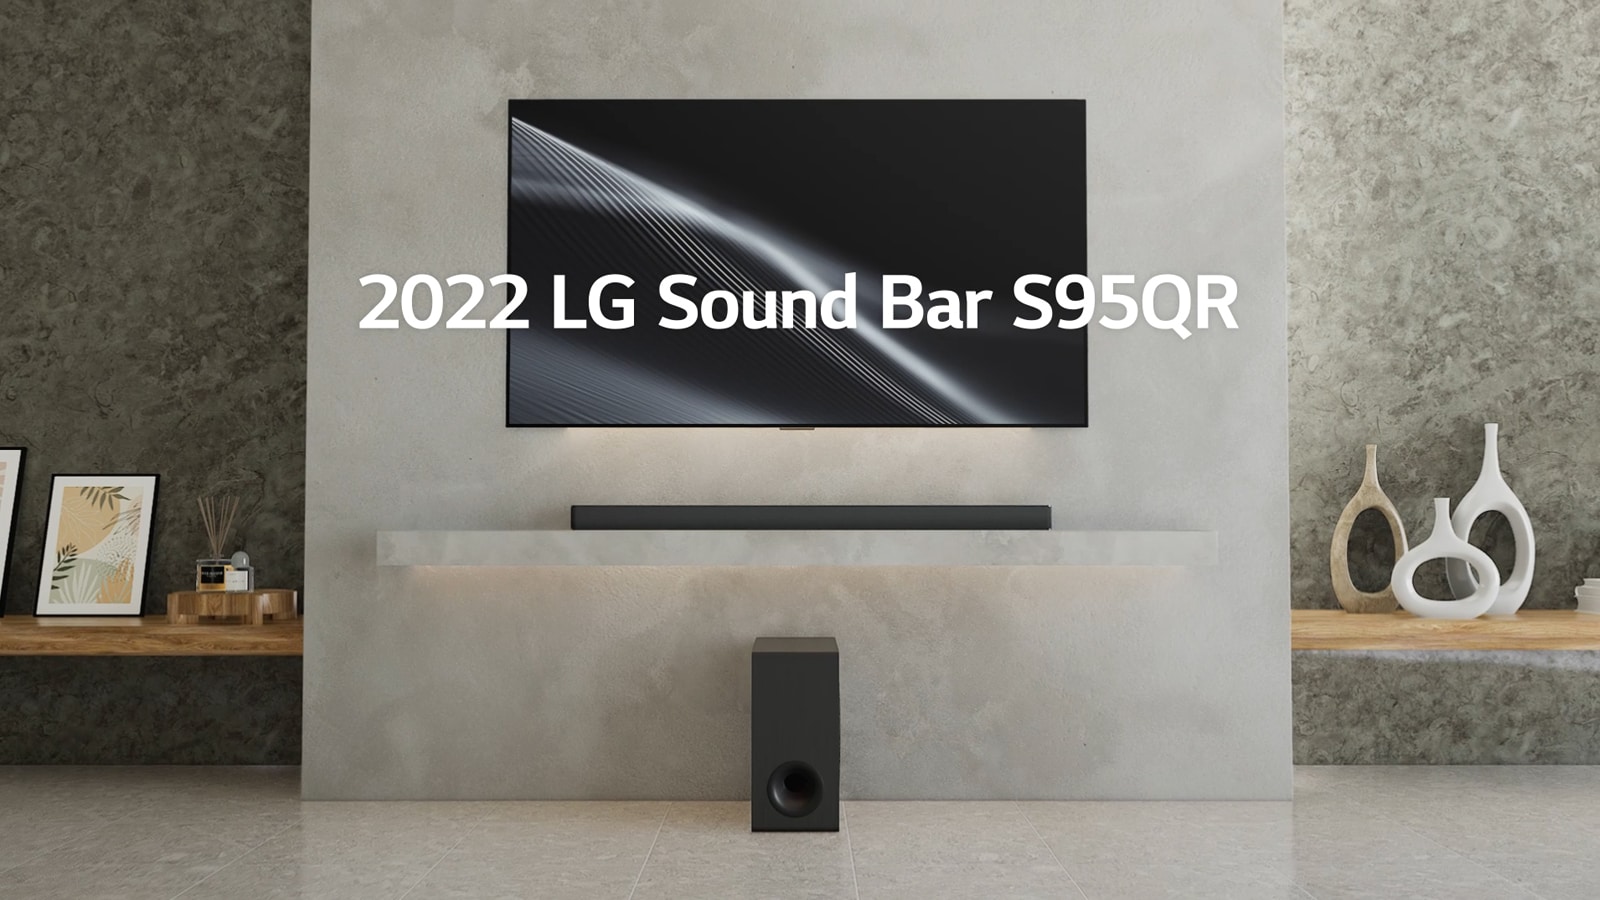 LG S95QR soundbar review: Top-notch Dolby Atmos sound